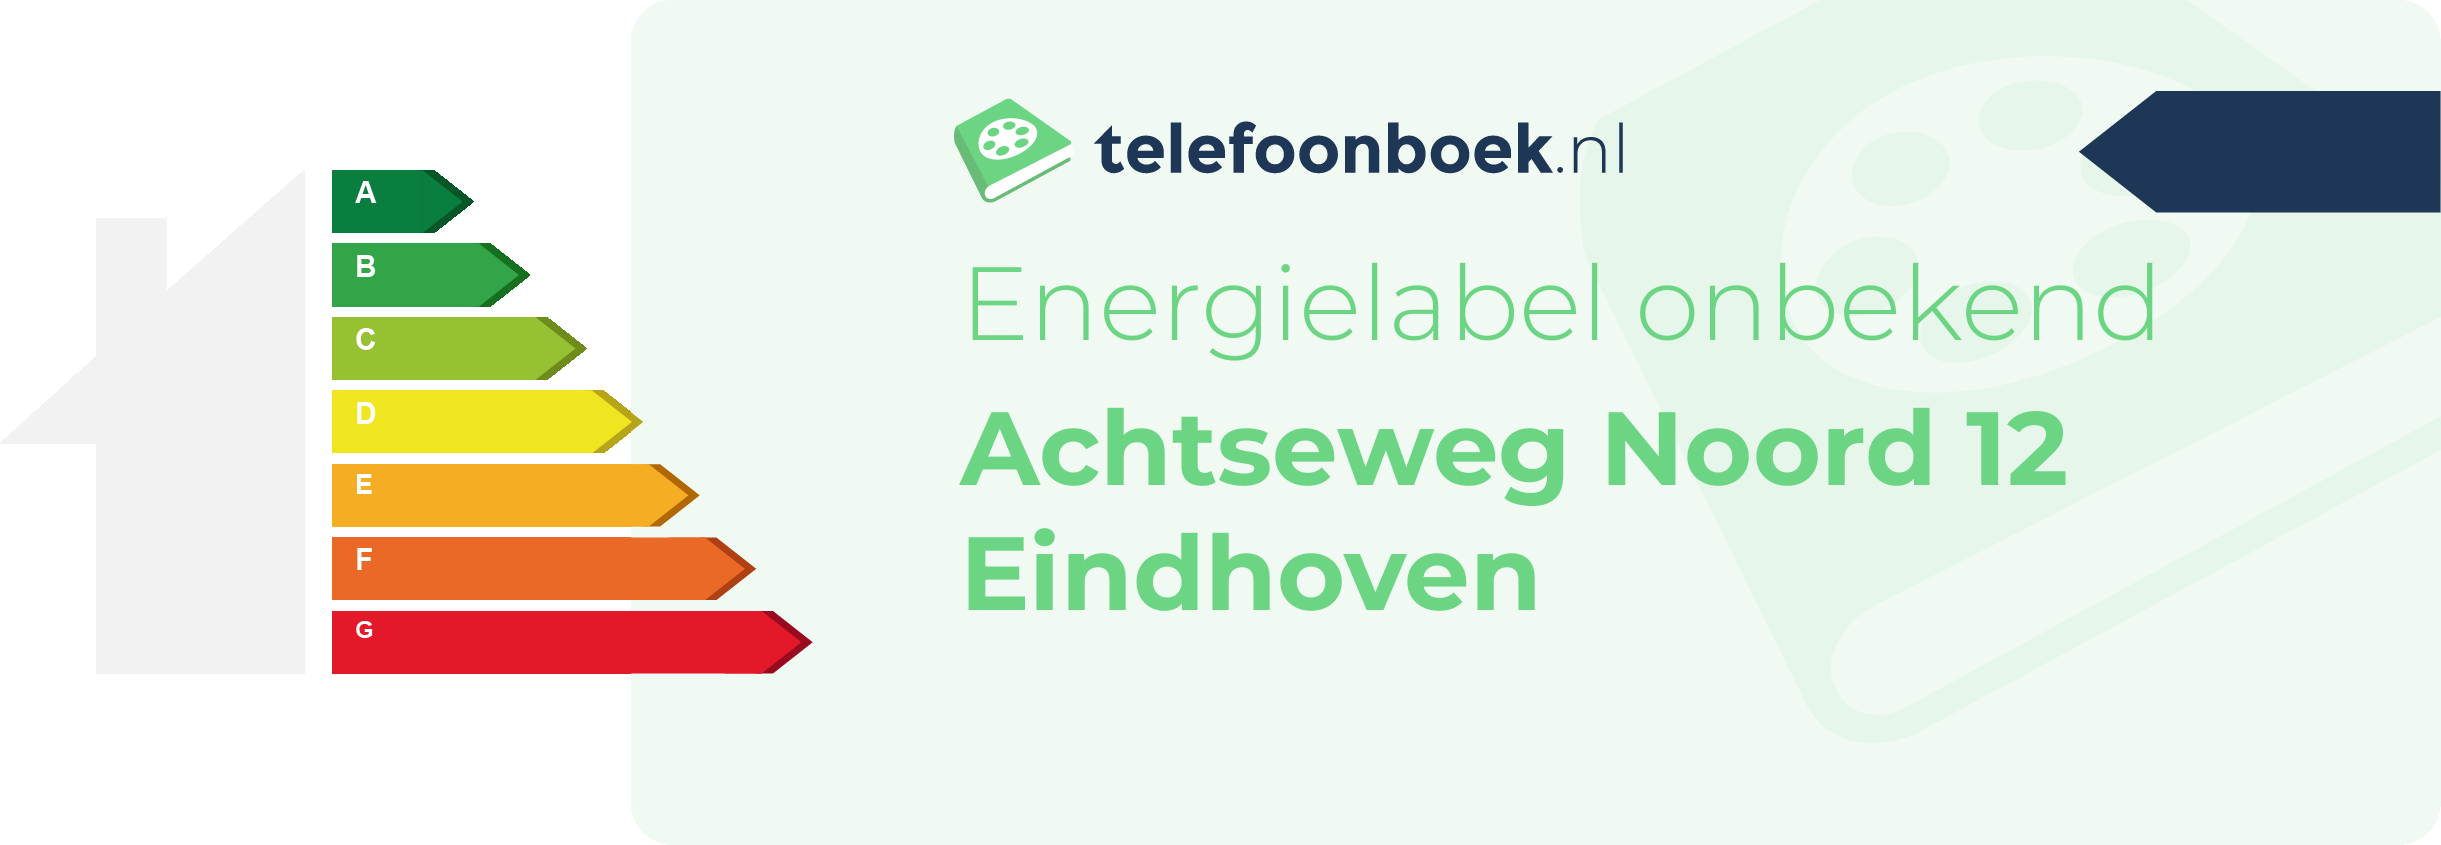 Energielabel Achtseweg Noord 12 Eindhoven